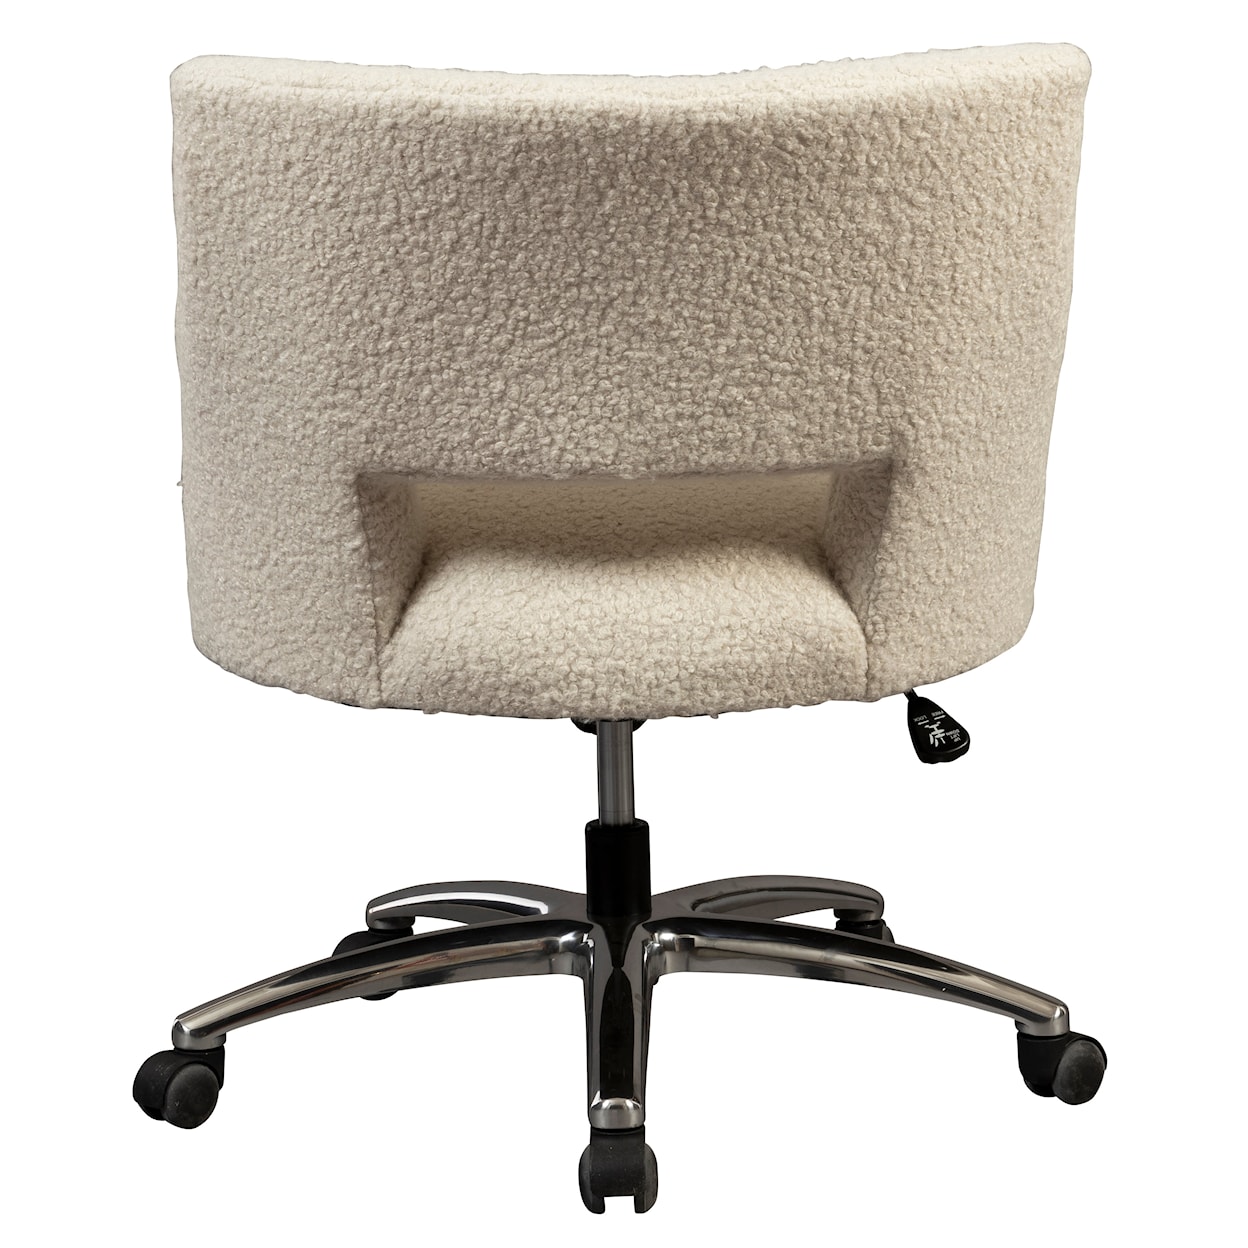 Hekman Upholstery Ariana Office Chair